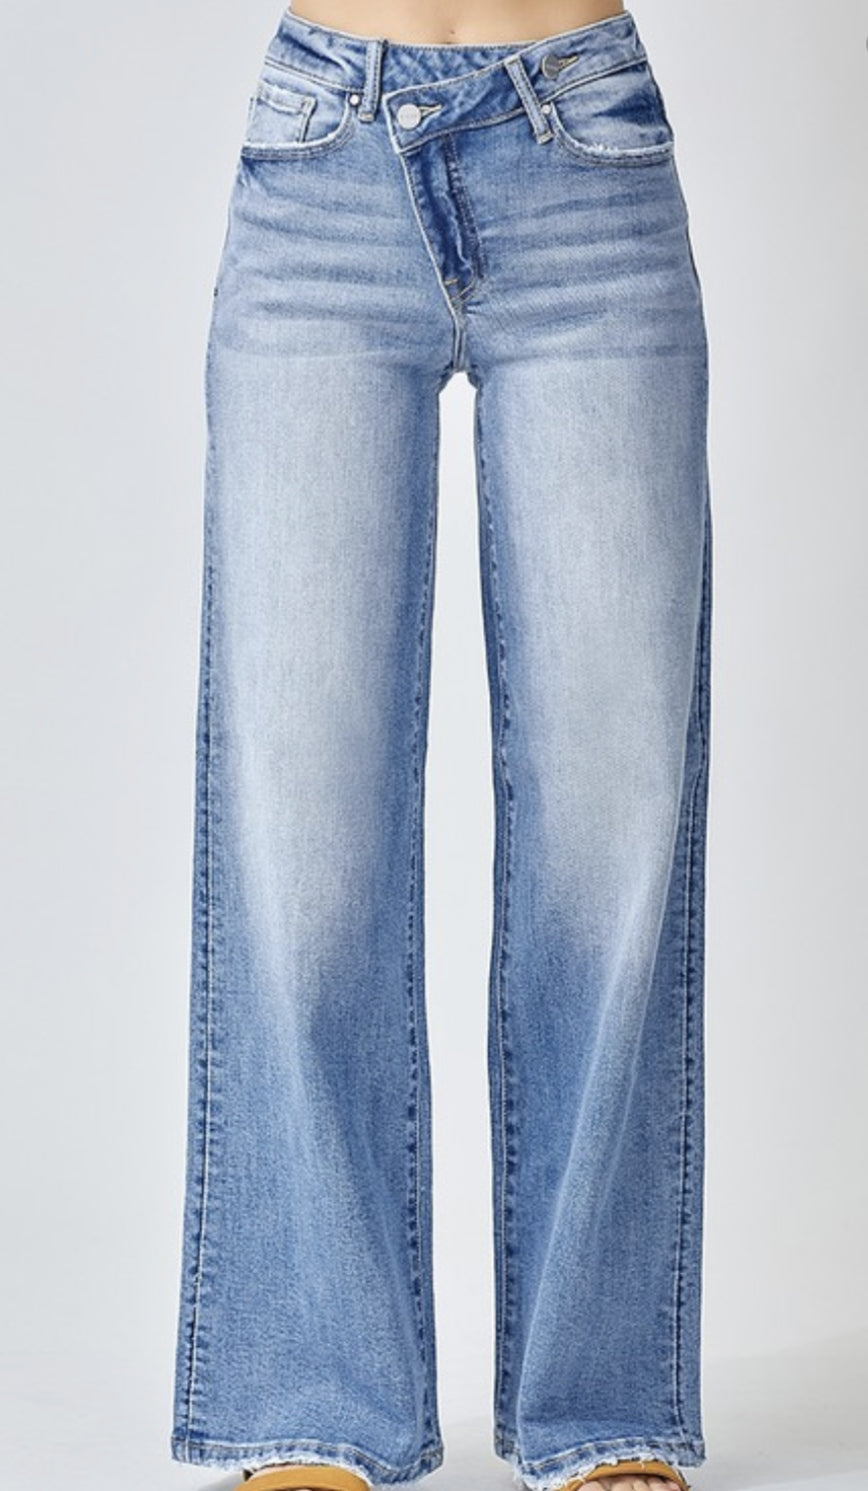 Risen wide leg jeans #S180